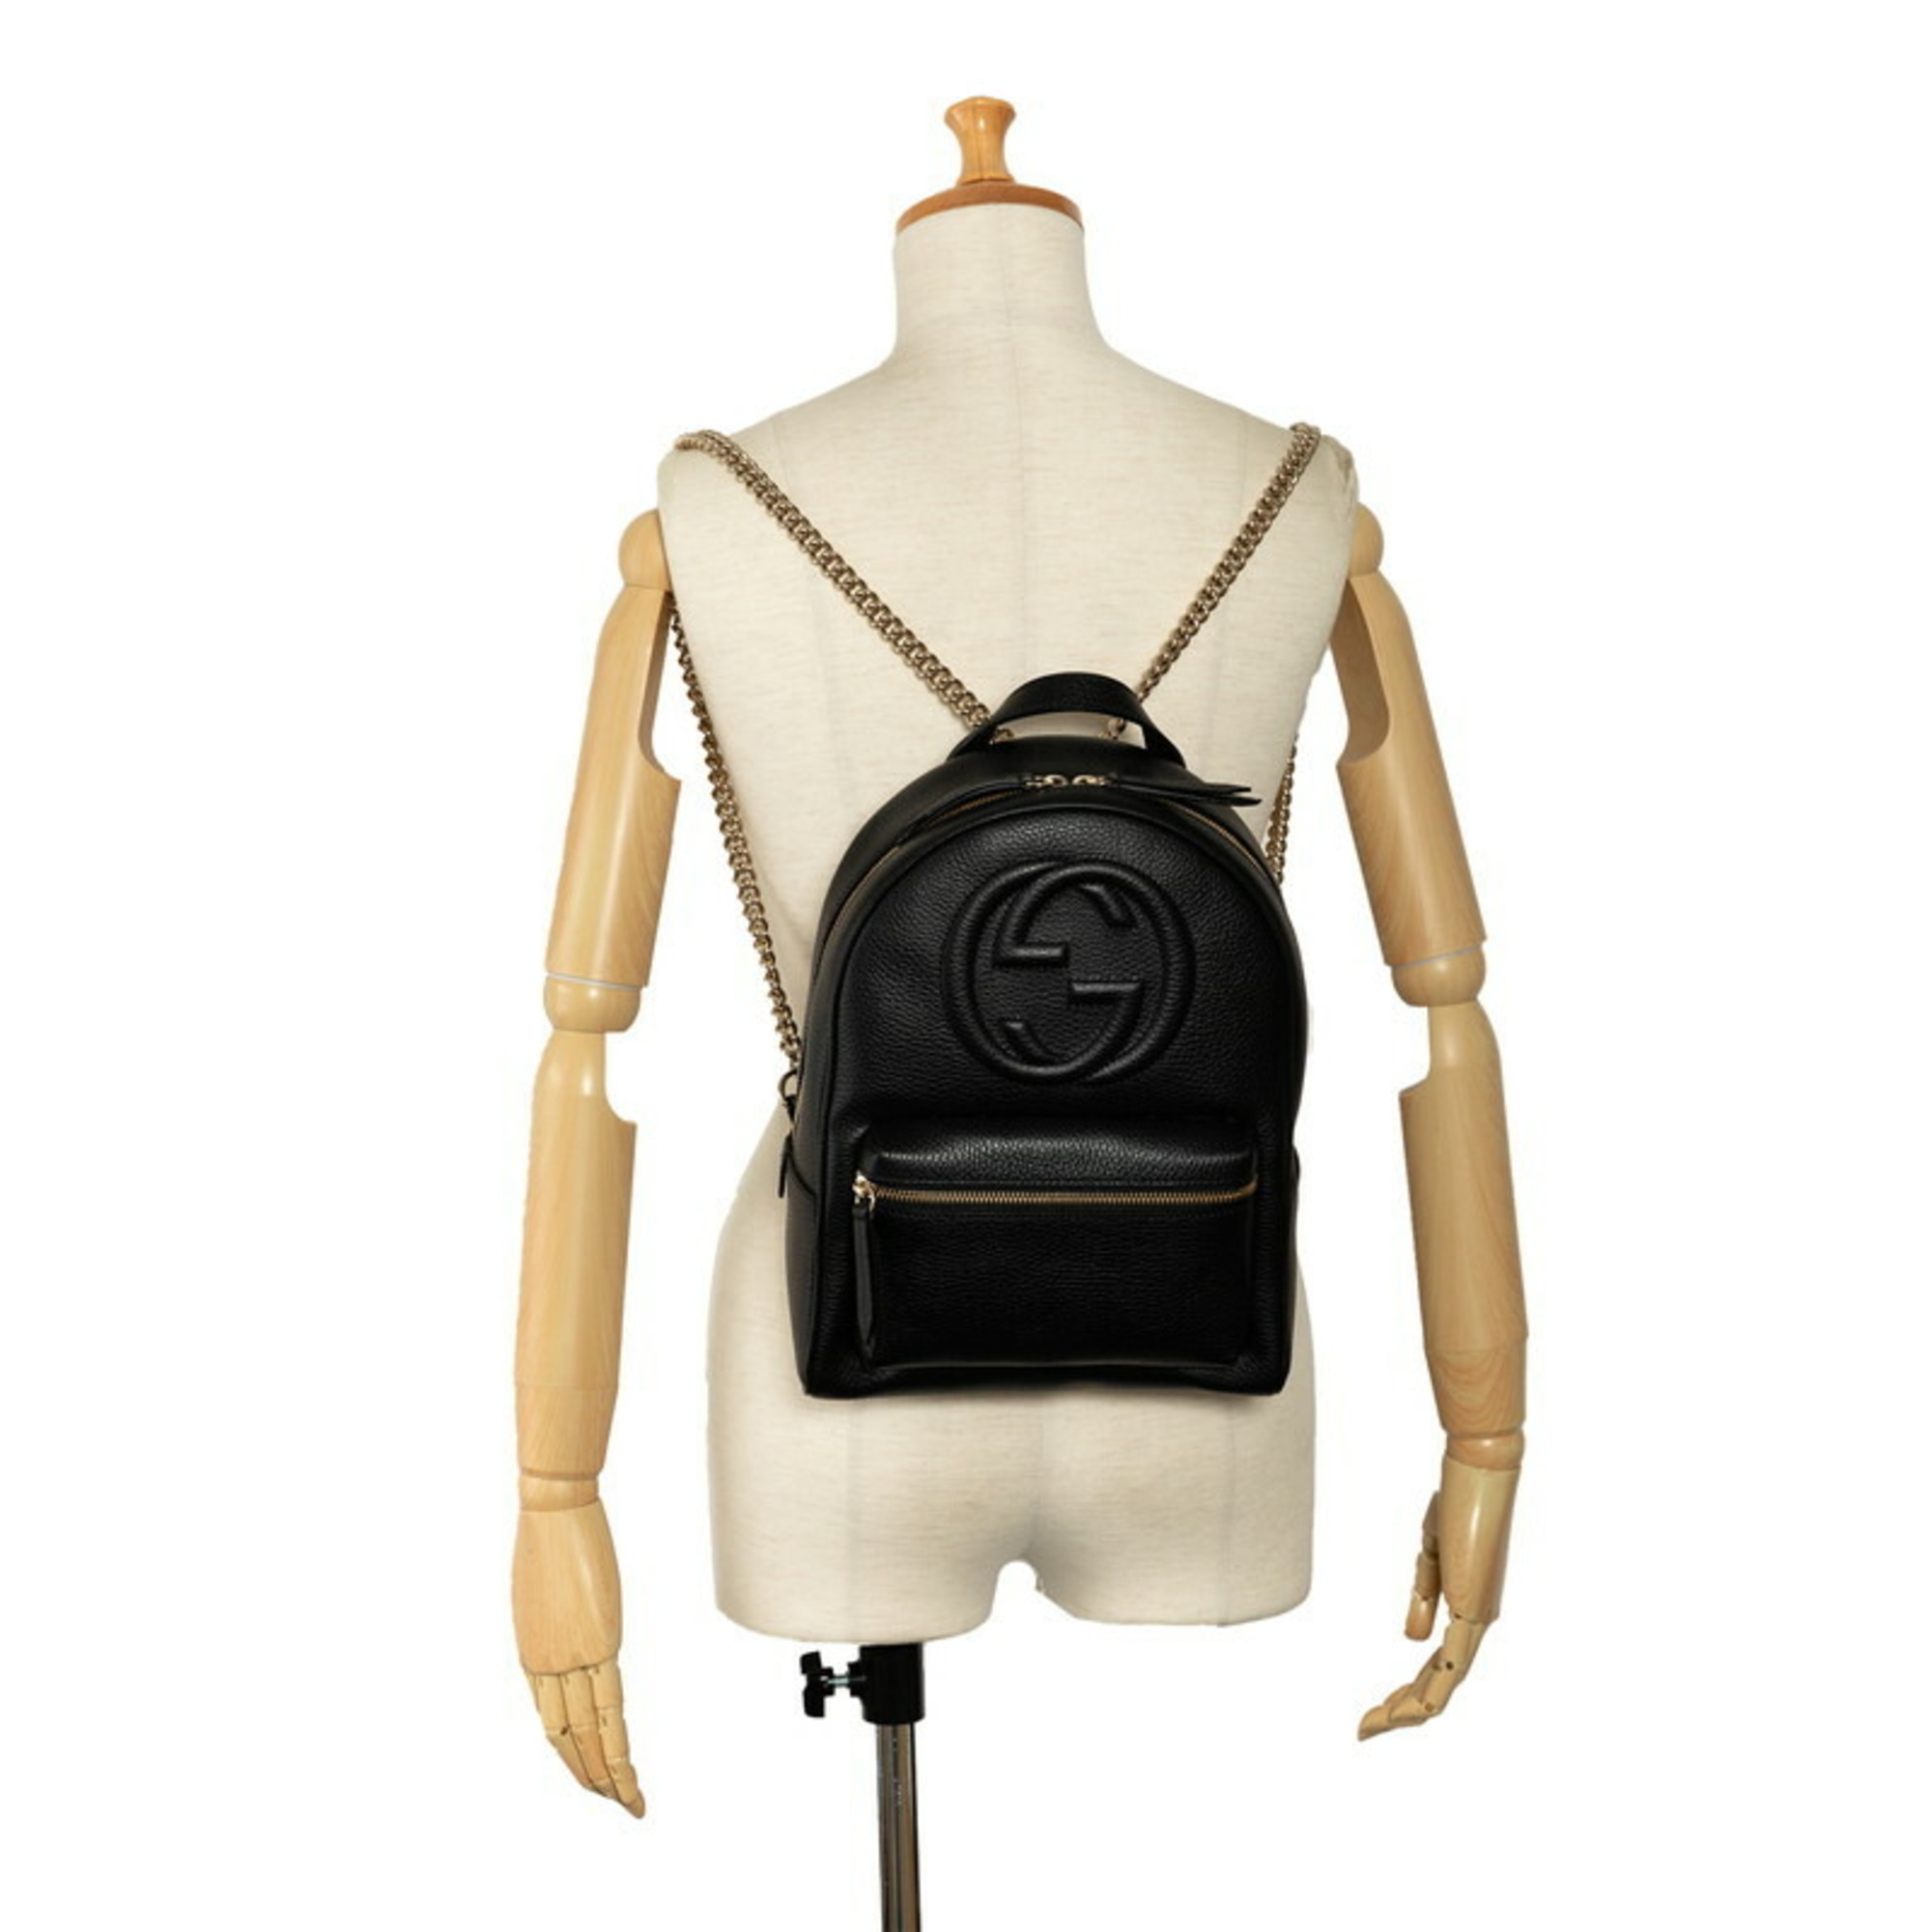 Gucci Interlocking G Soho Chain Backpack 536192 Black Leather Women's GUCCI